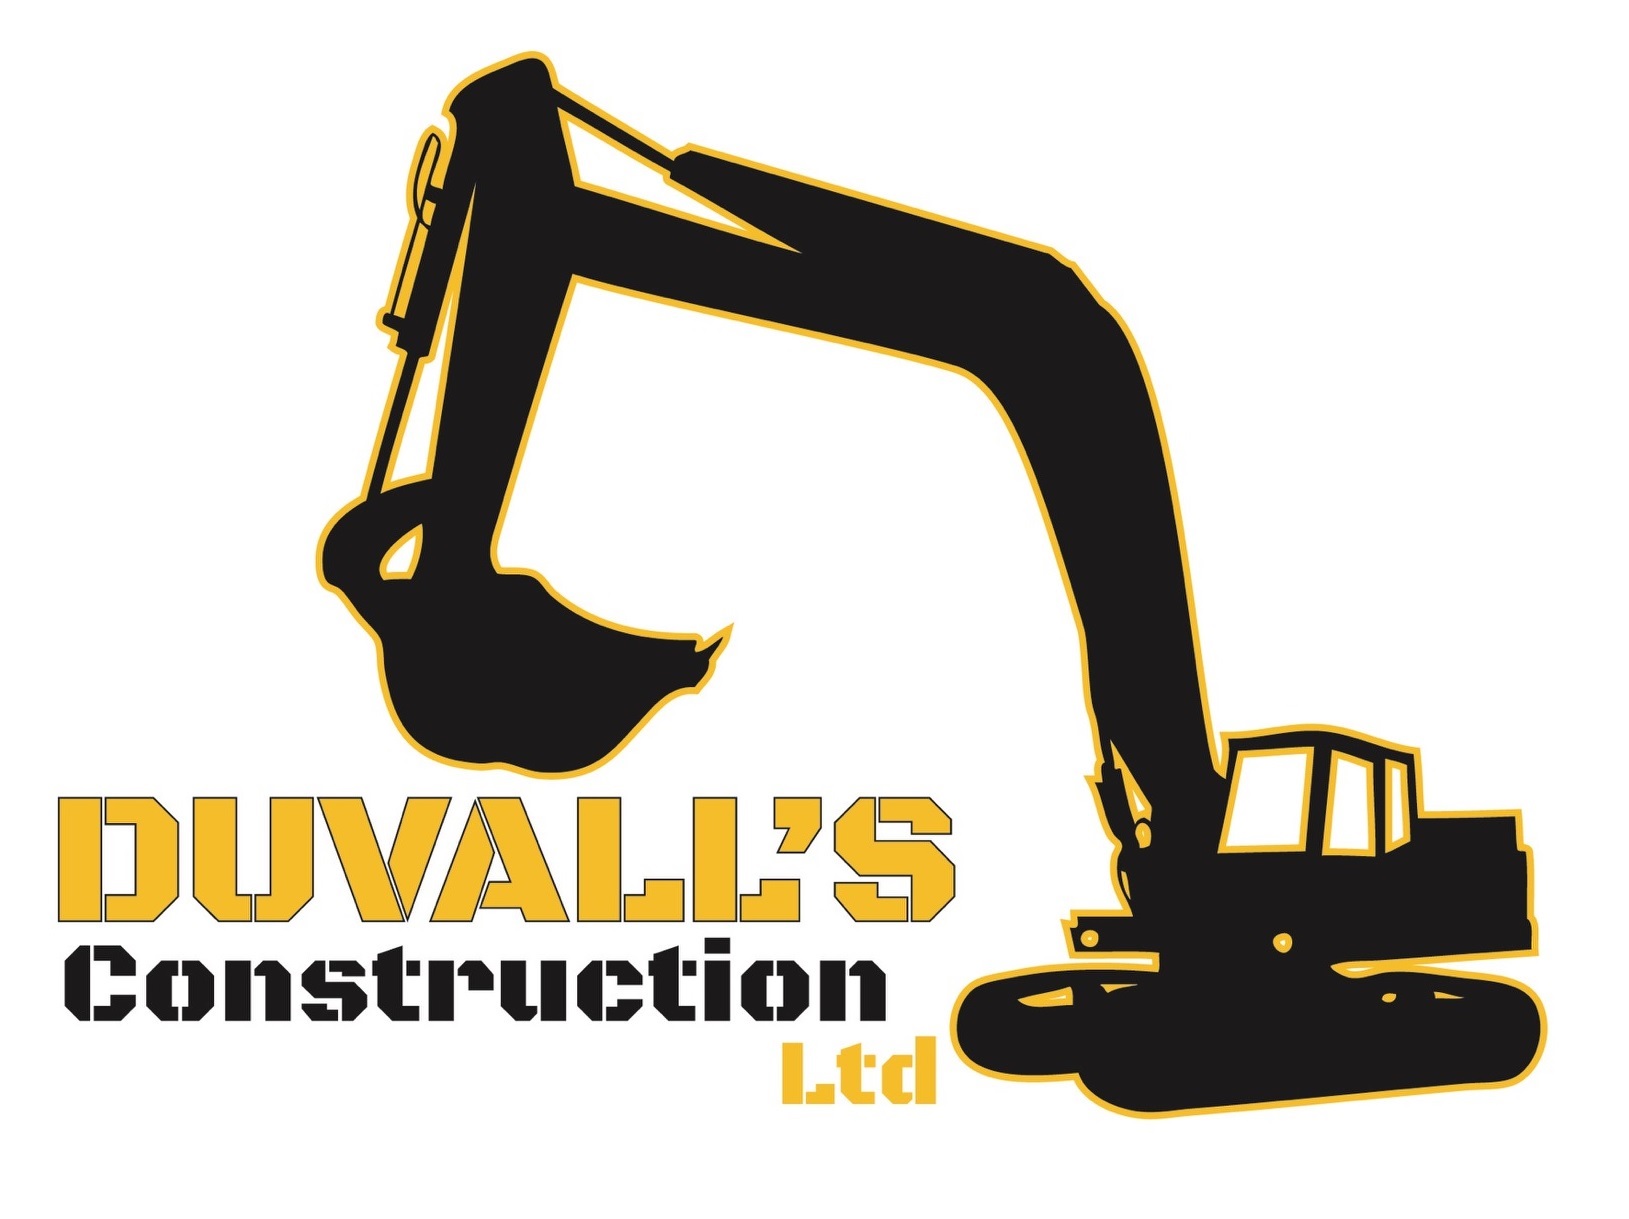 Duvall's contracting LTD / Duvalls Construction